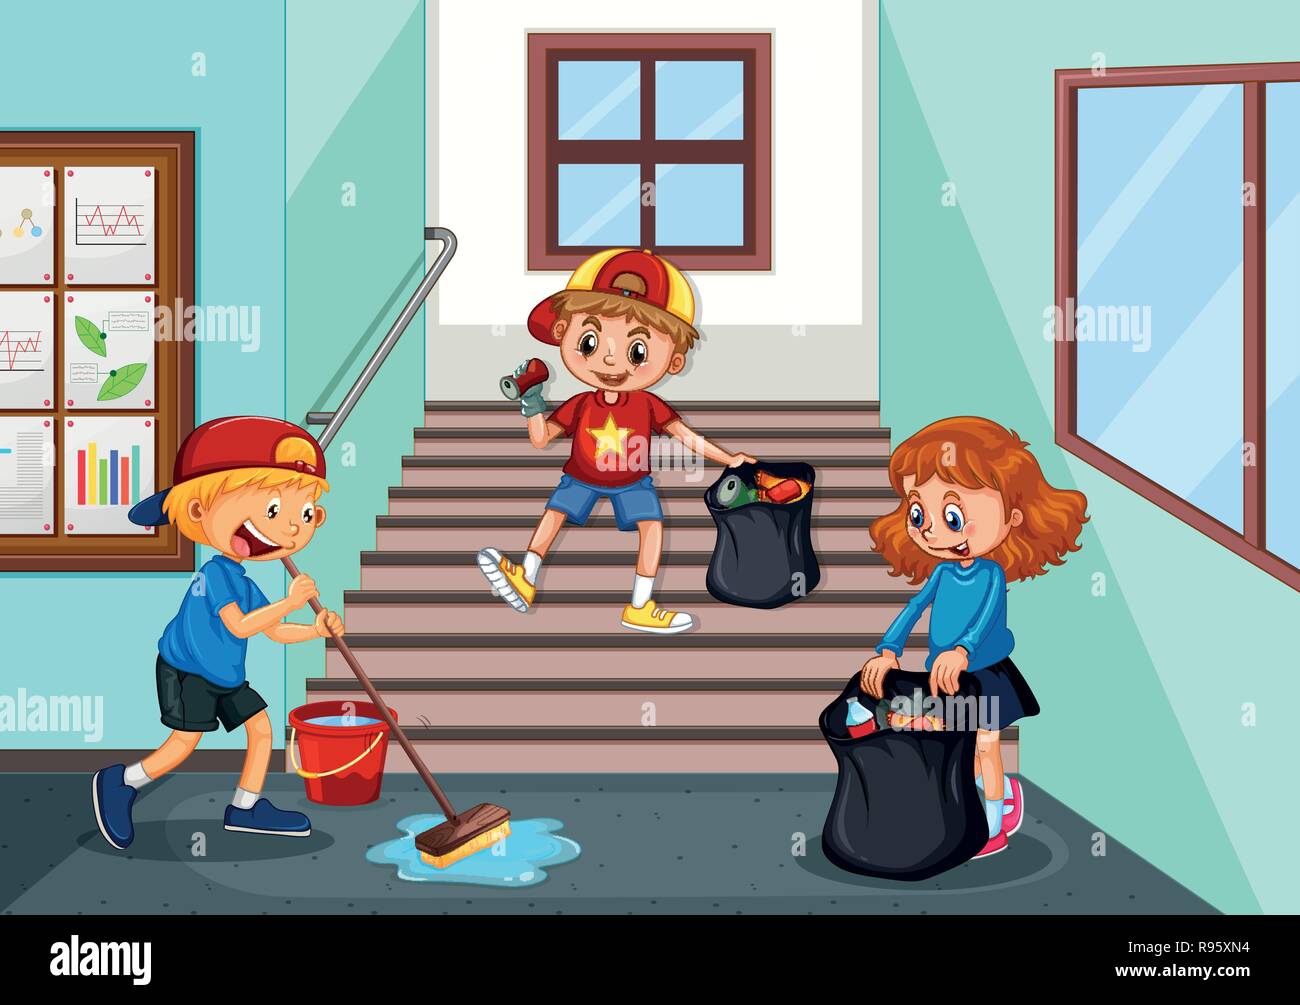 Children cleaning school hallway illustration Stock Vector